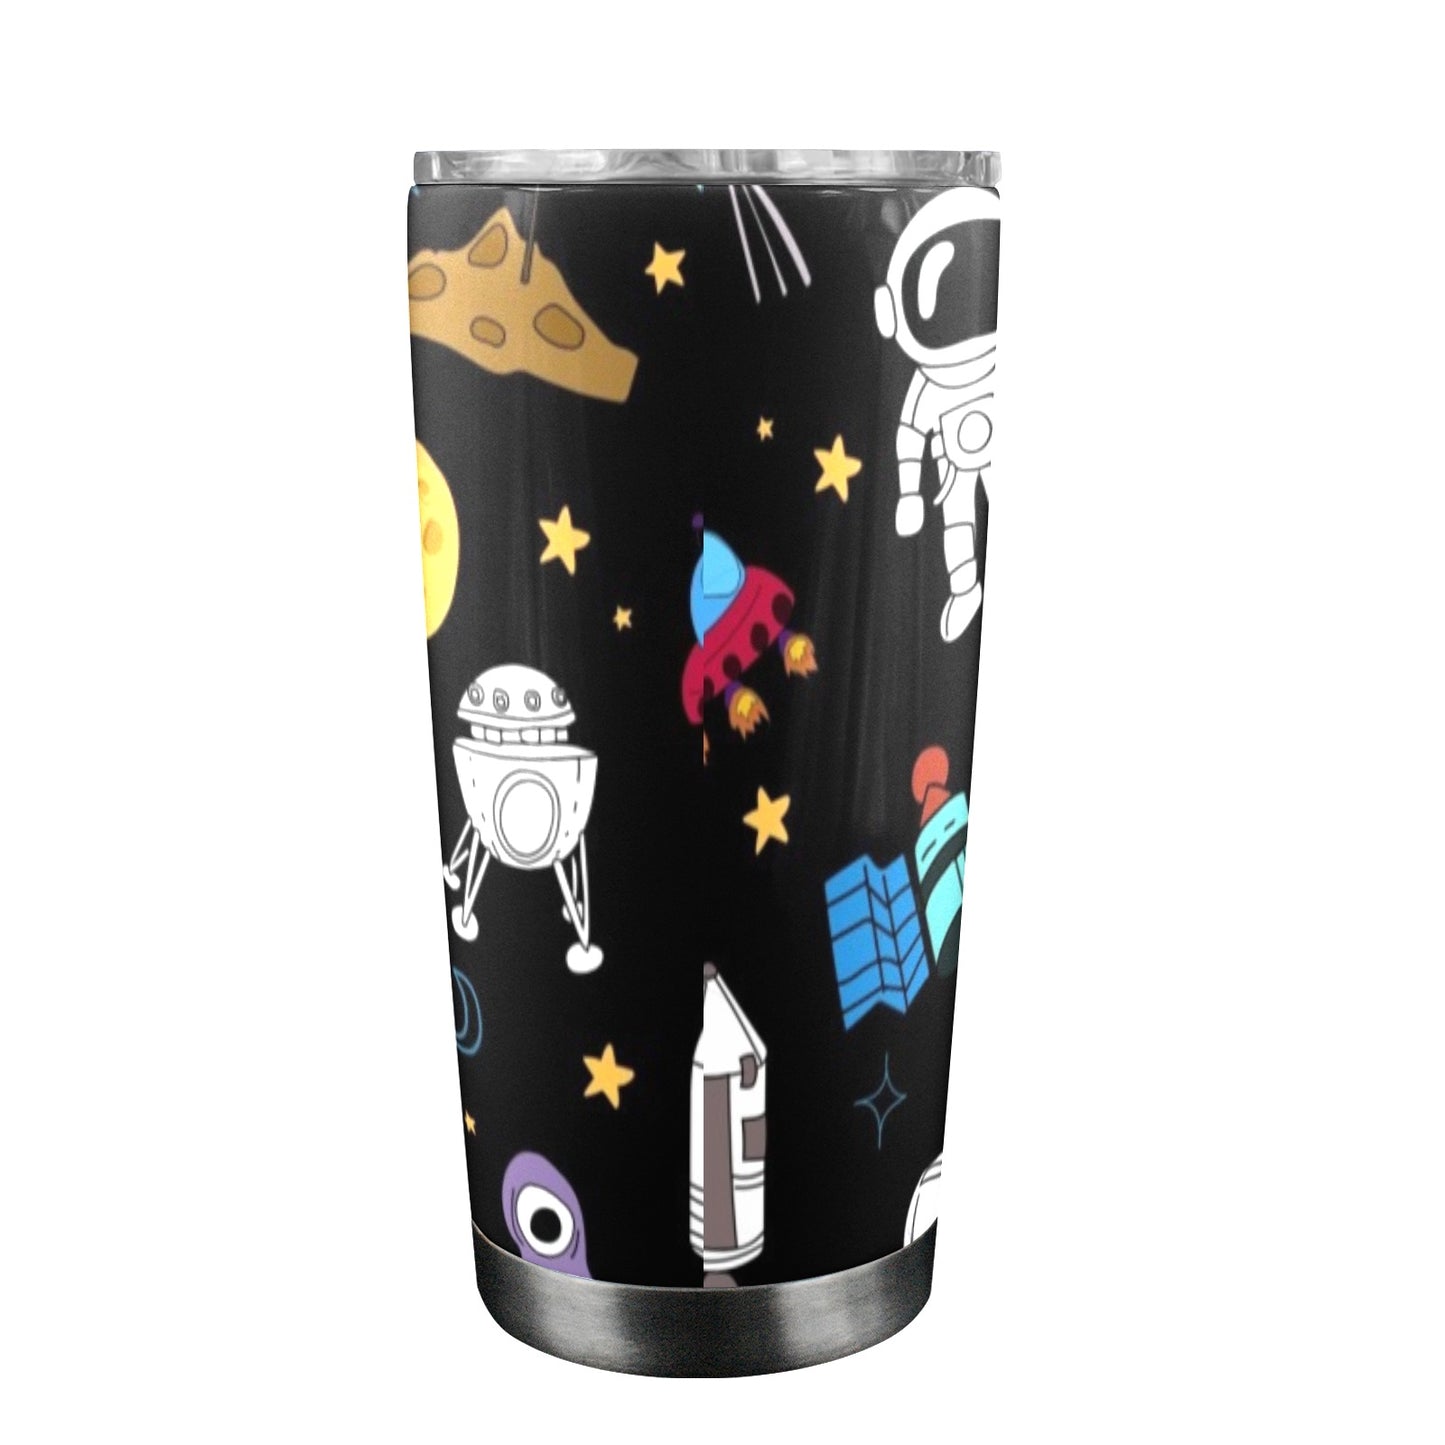 Kids Space - 20oz Travel Mug with Clear Lid Clear Lid Travel Mug Space